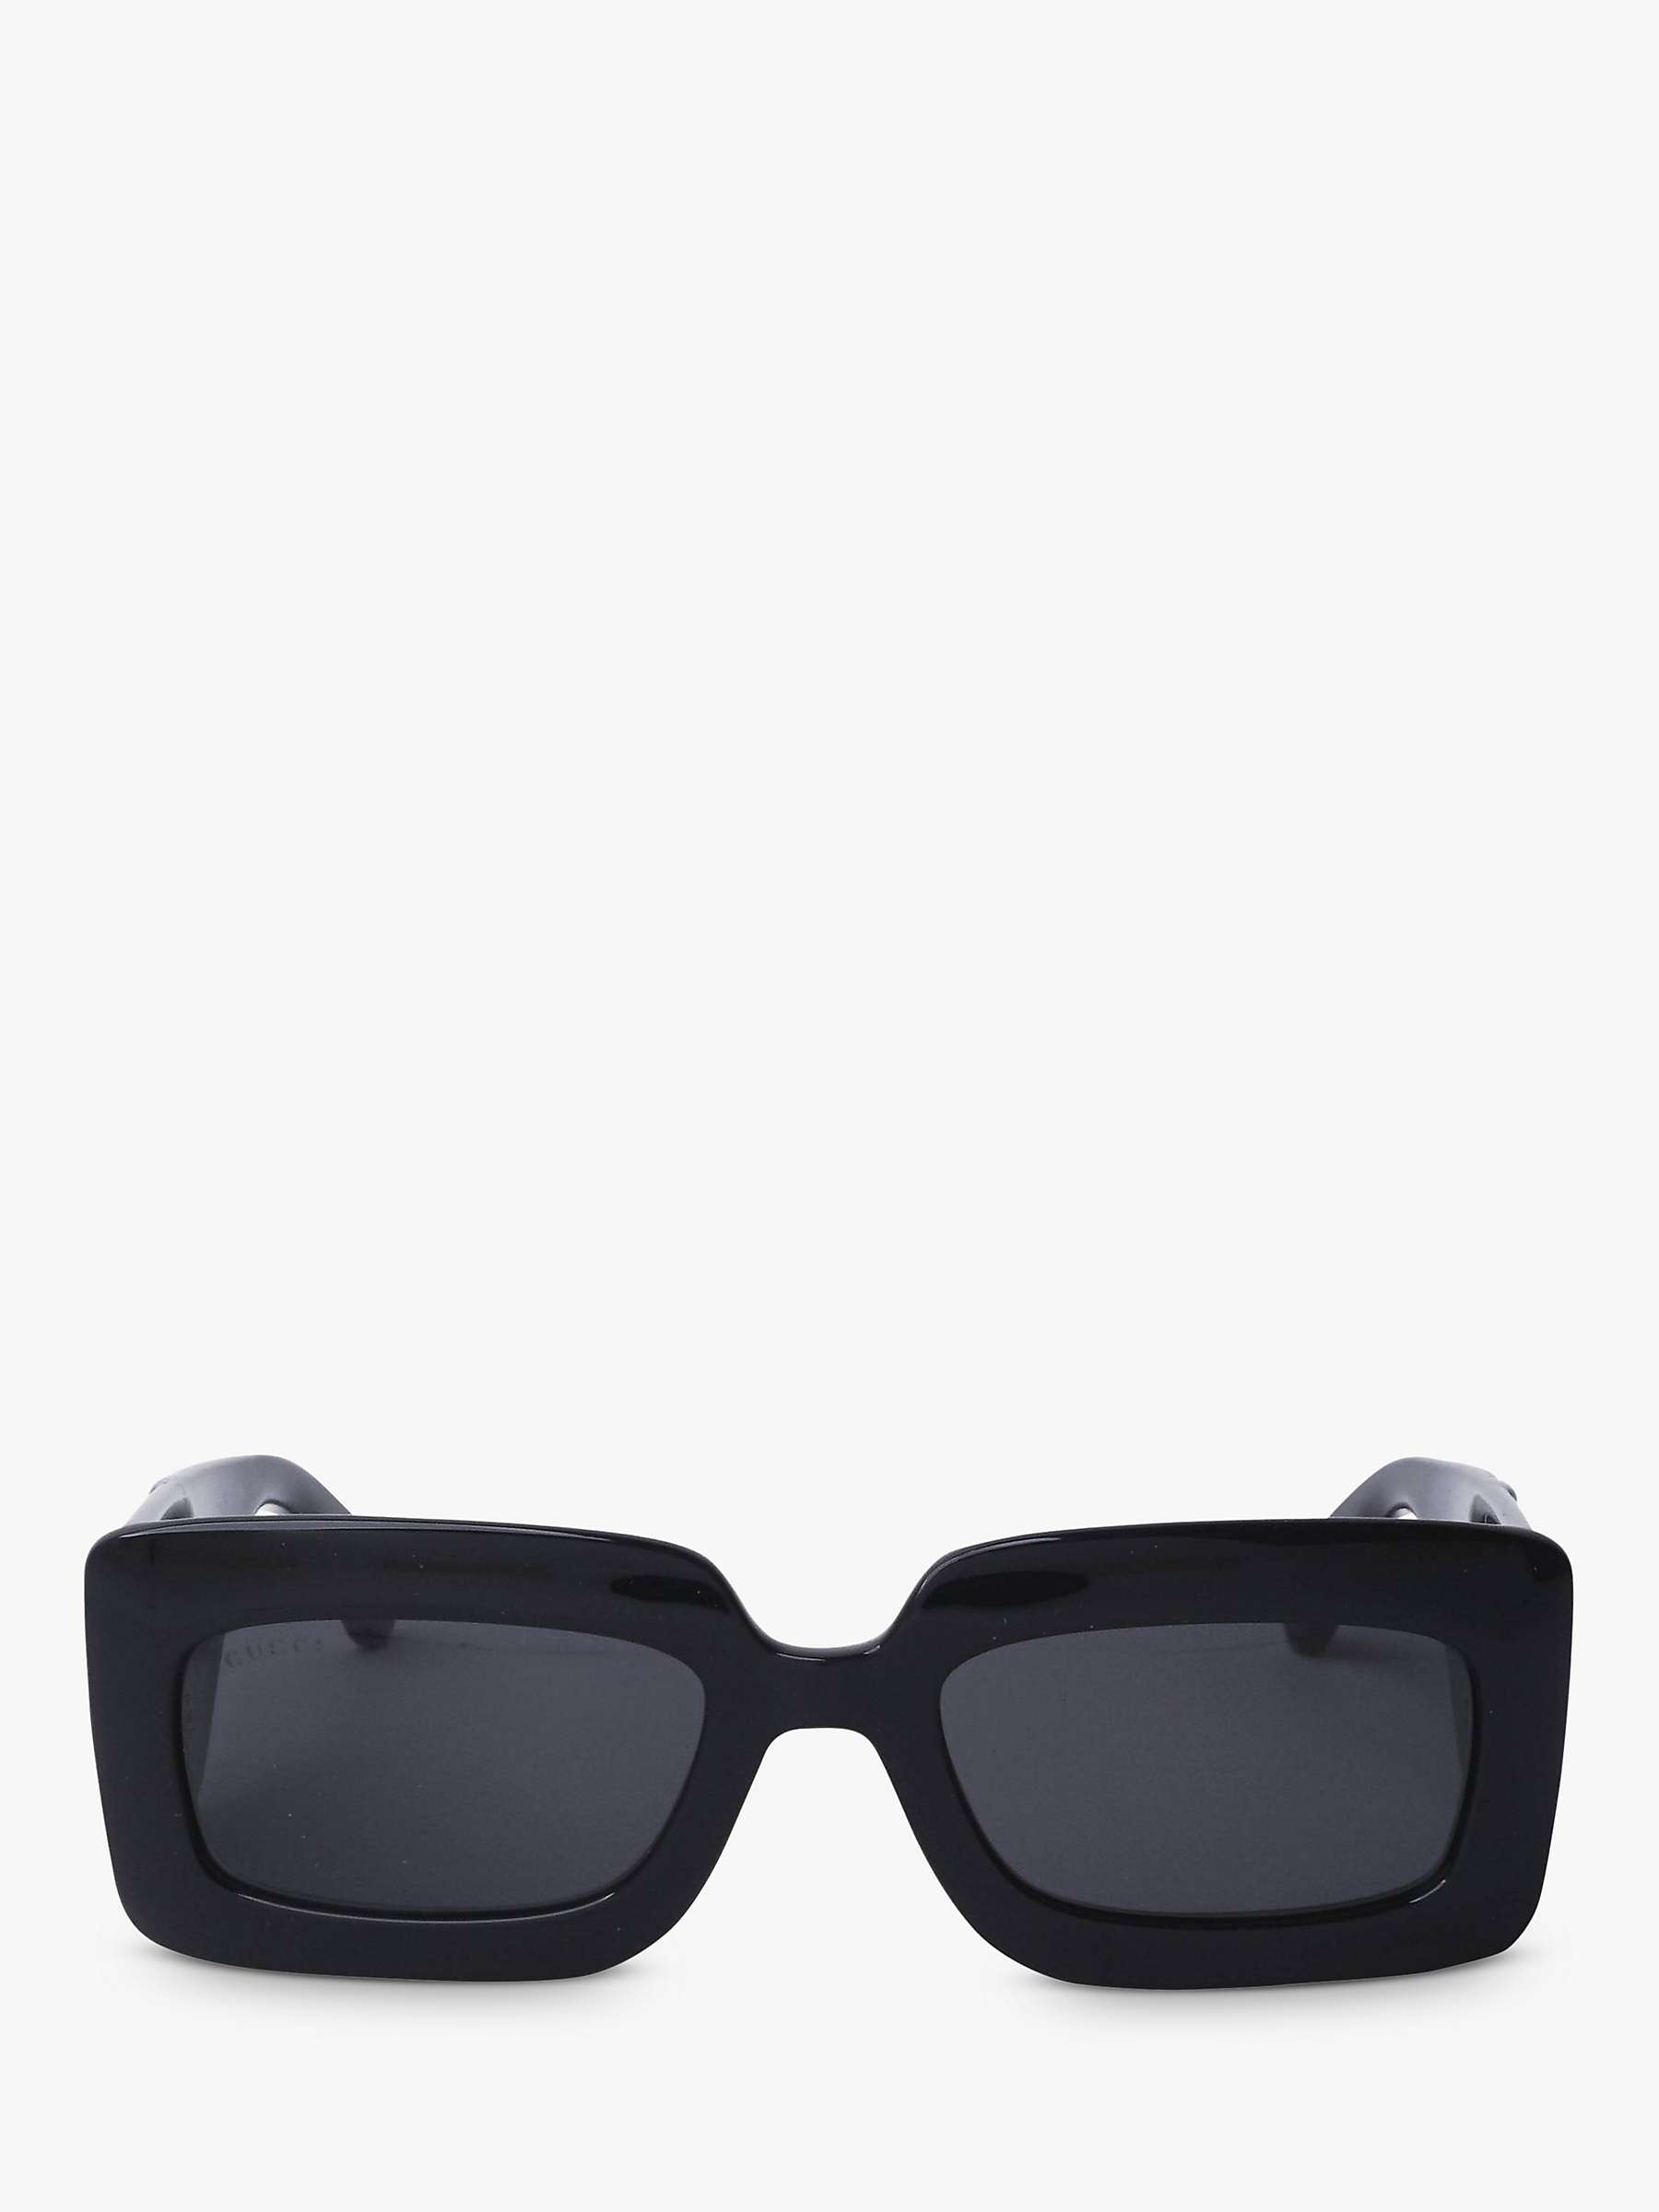 Buy Gucci GG0811S Women's Rectangular Sunglasses, Black/Grey Online at johnlewis.com